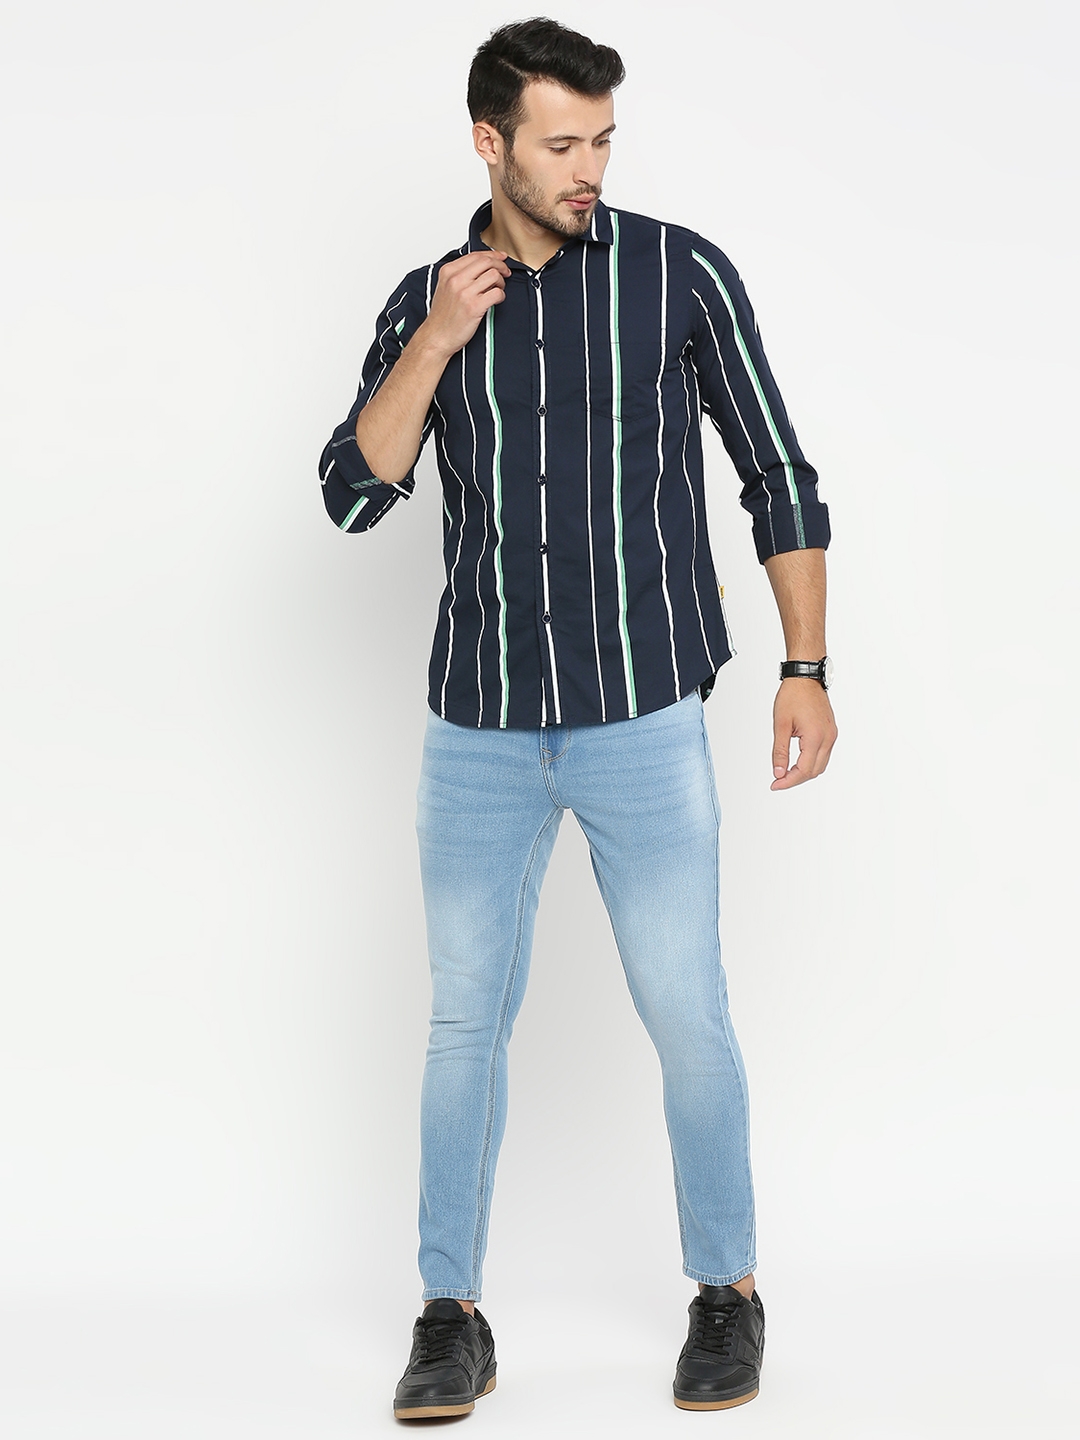 spykar | Men's Blue Cotton Striped Casual Shirts 5